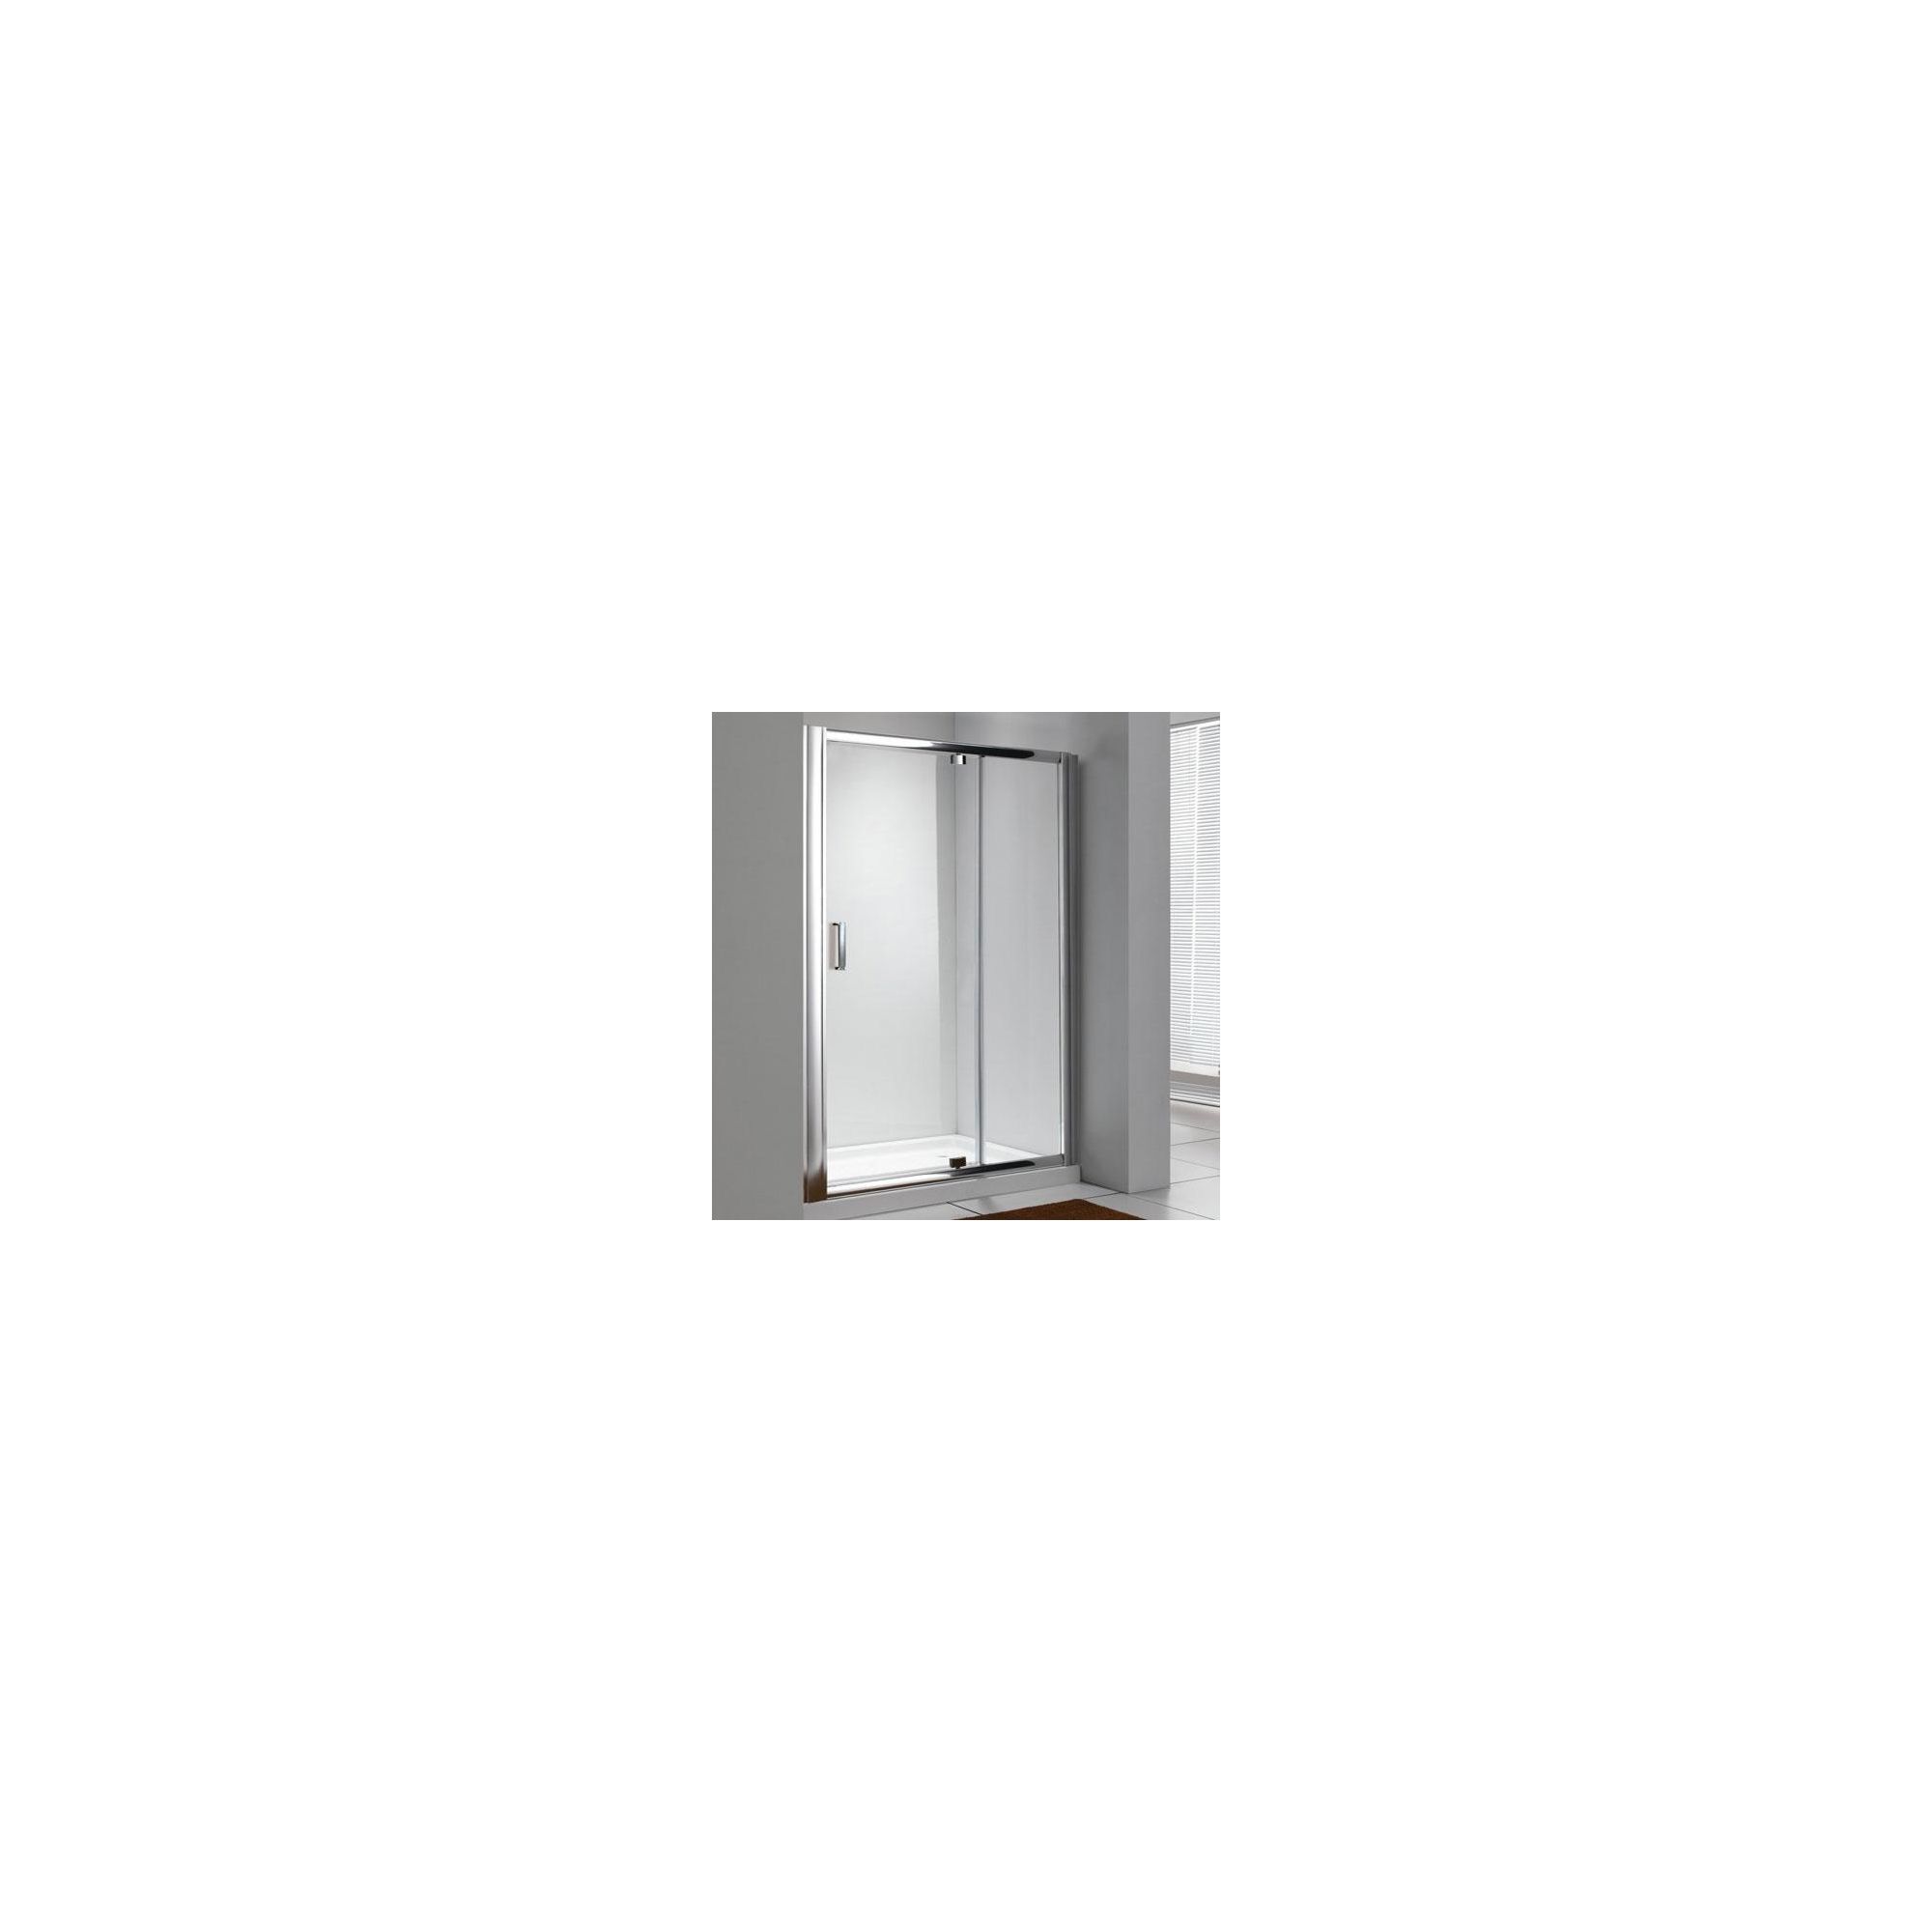 Duchy Style Pivot Shower Door, 1100mm Wide, 6mm Glass at Tesco Direct